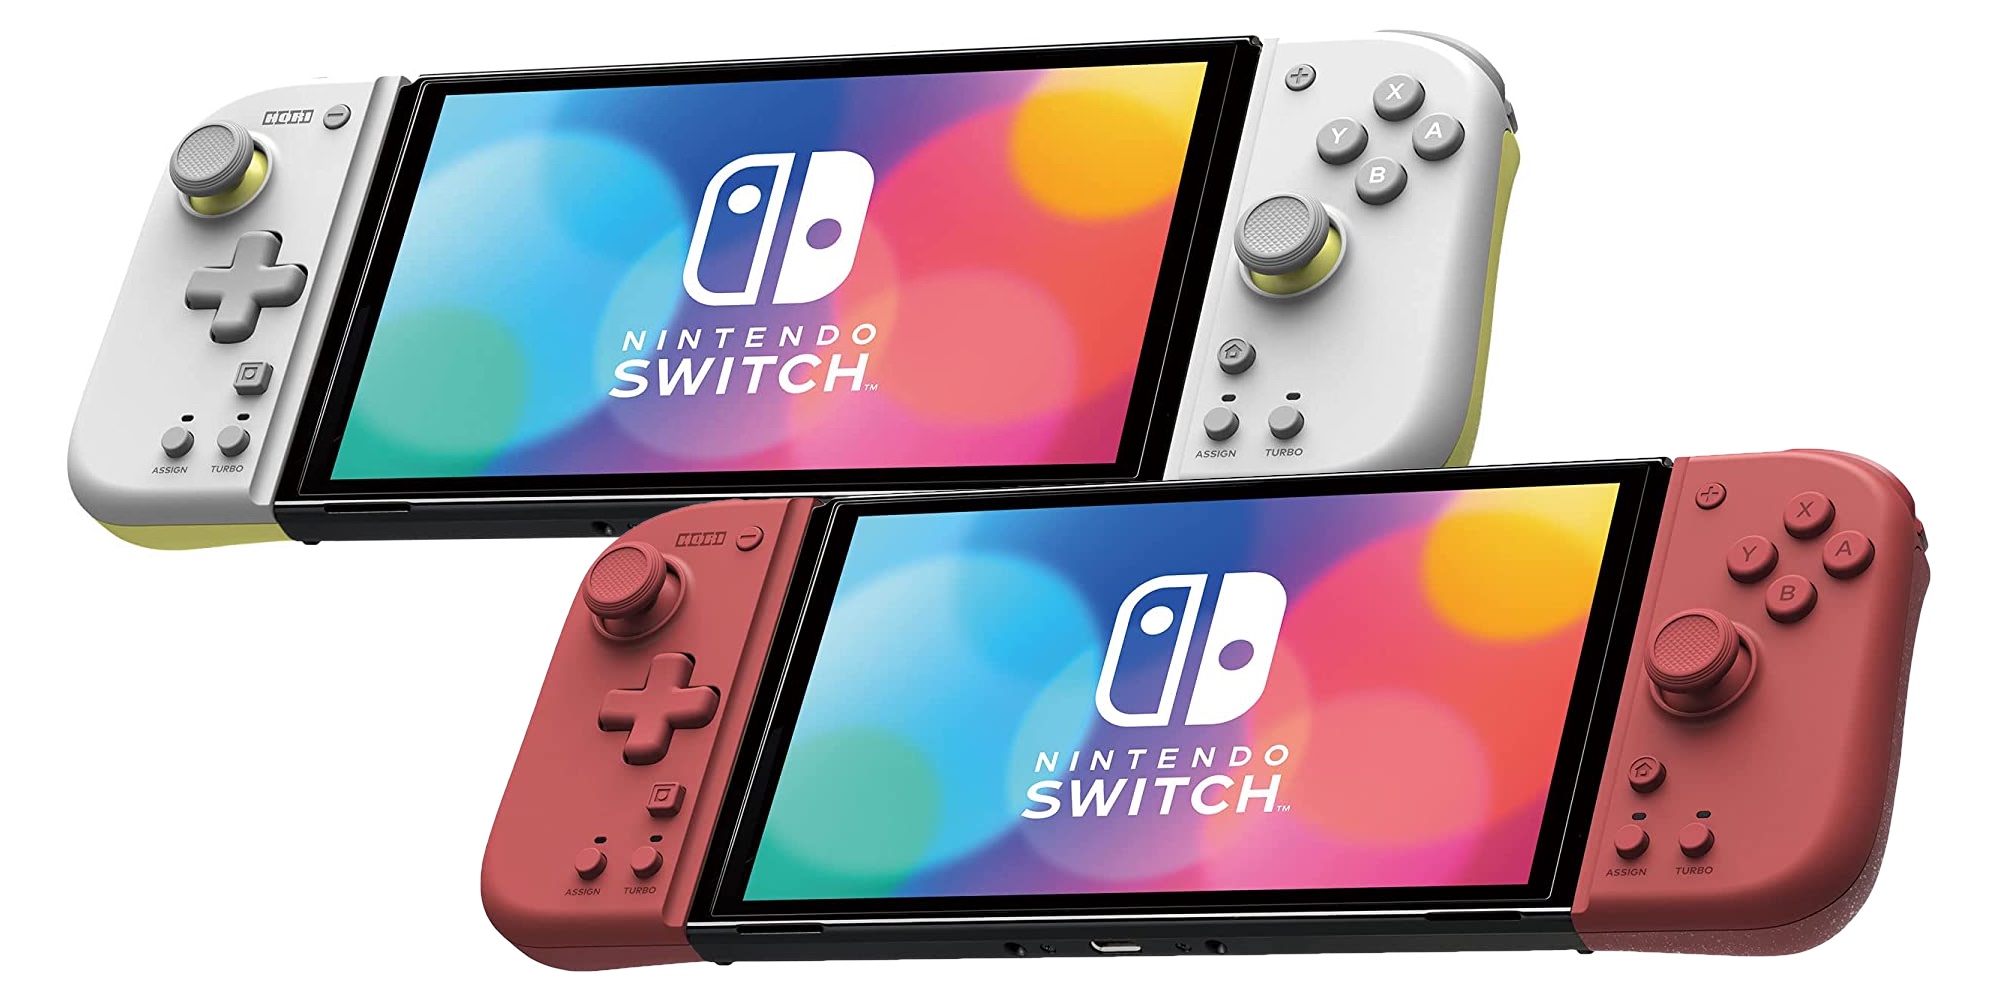 HORI Split Pad Compact Nintendo Switch controller debuts